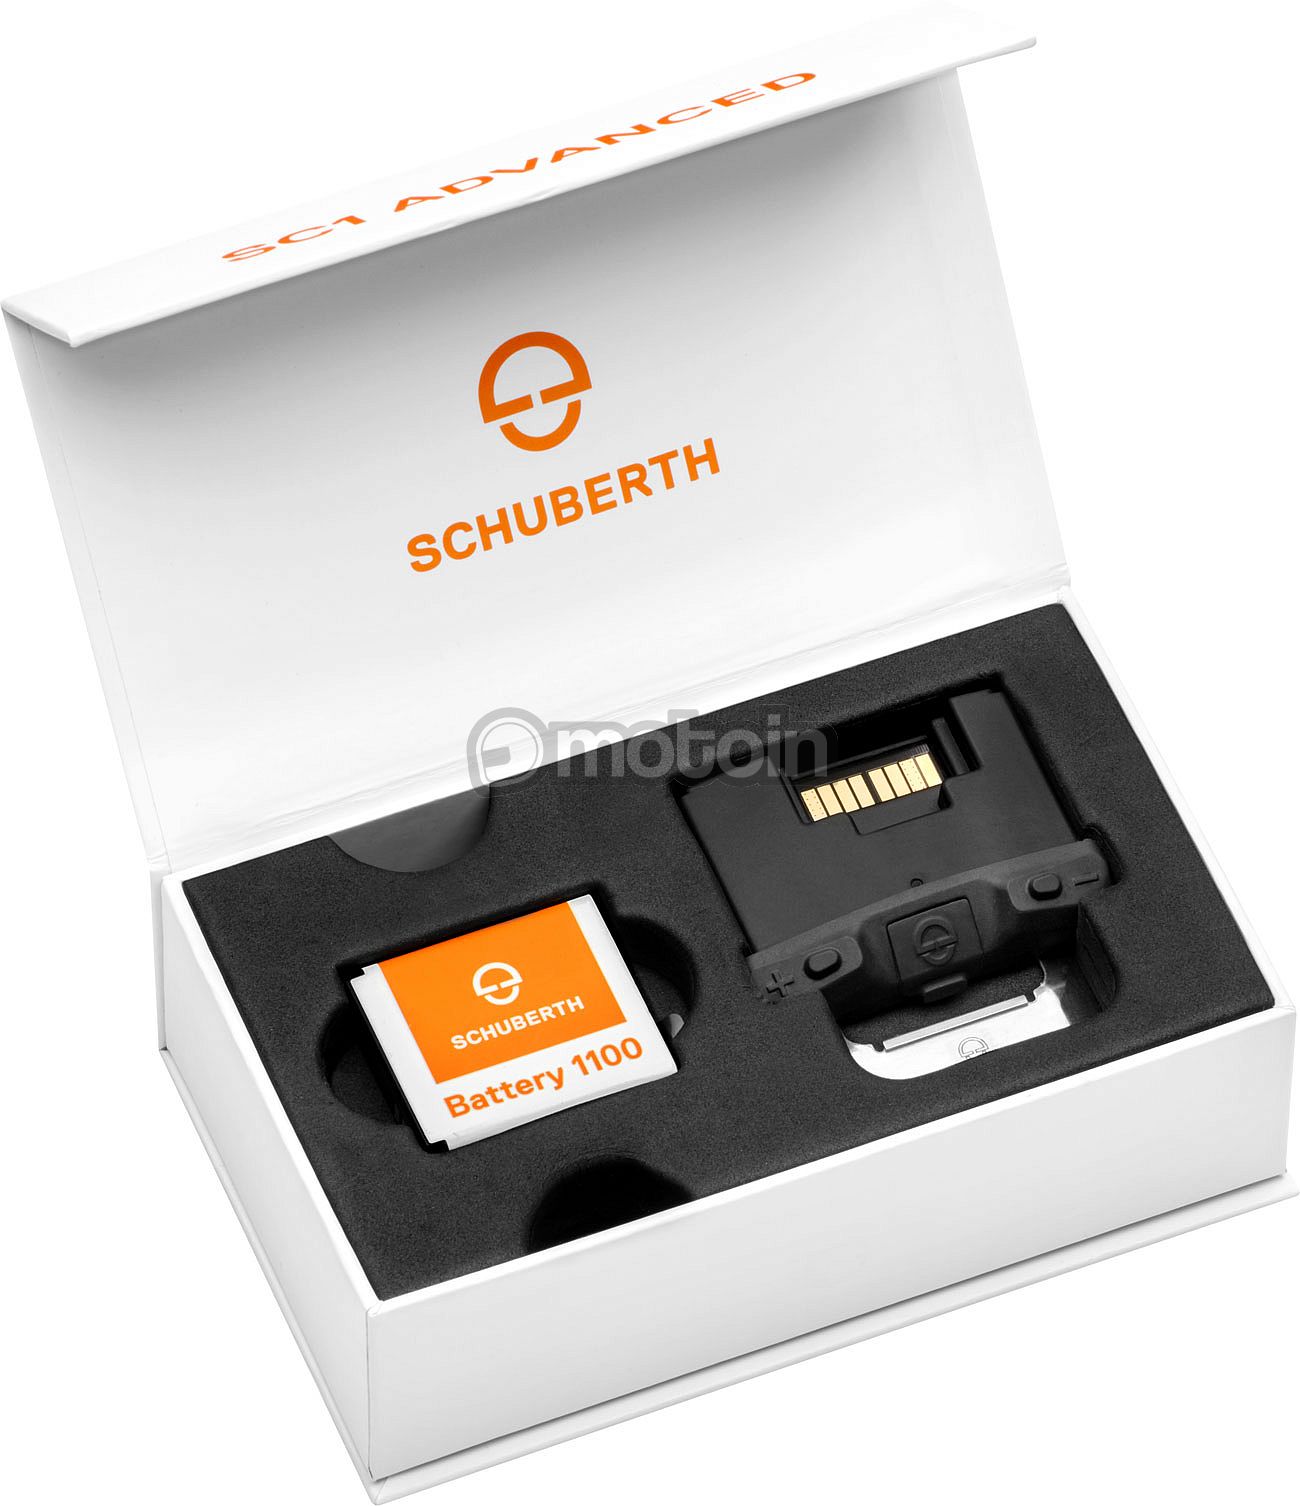 Schuberth SC1 Advanced, Kommunikationssystem